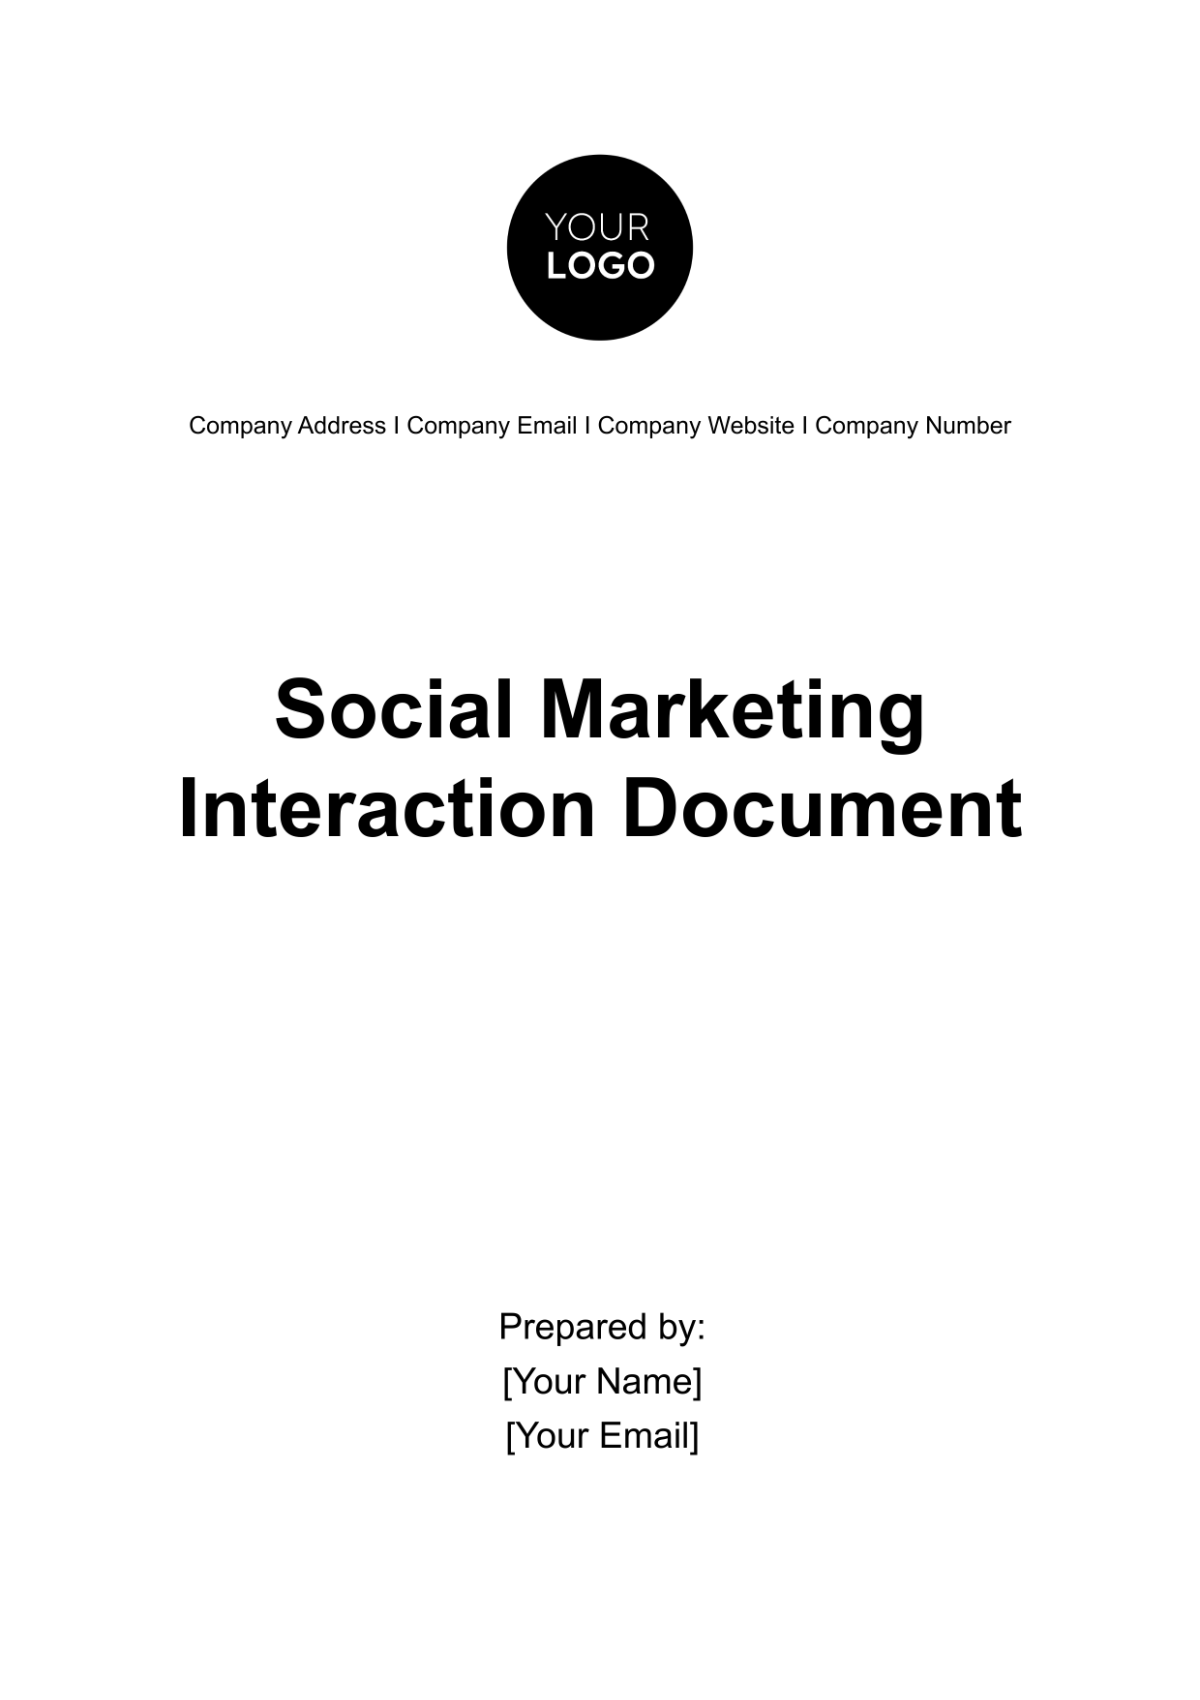 Social Media Marketing Interaction Document Template